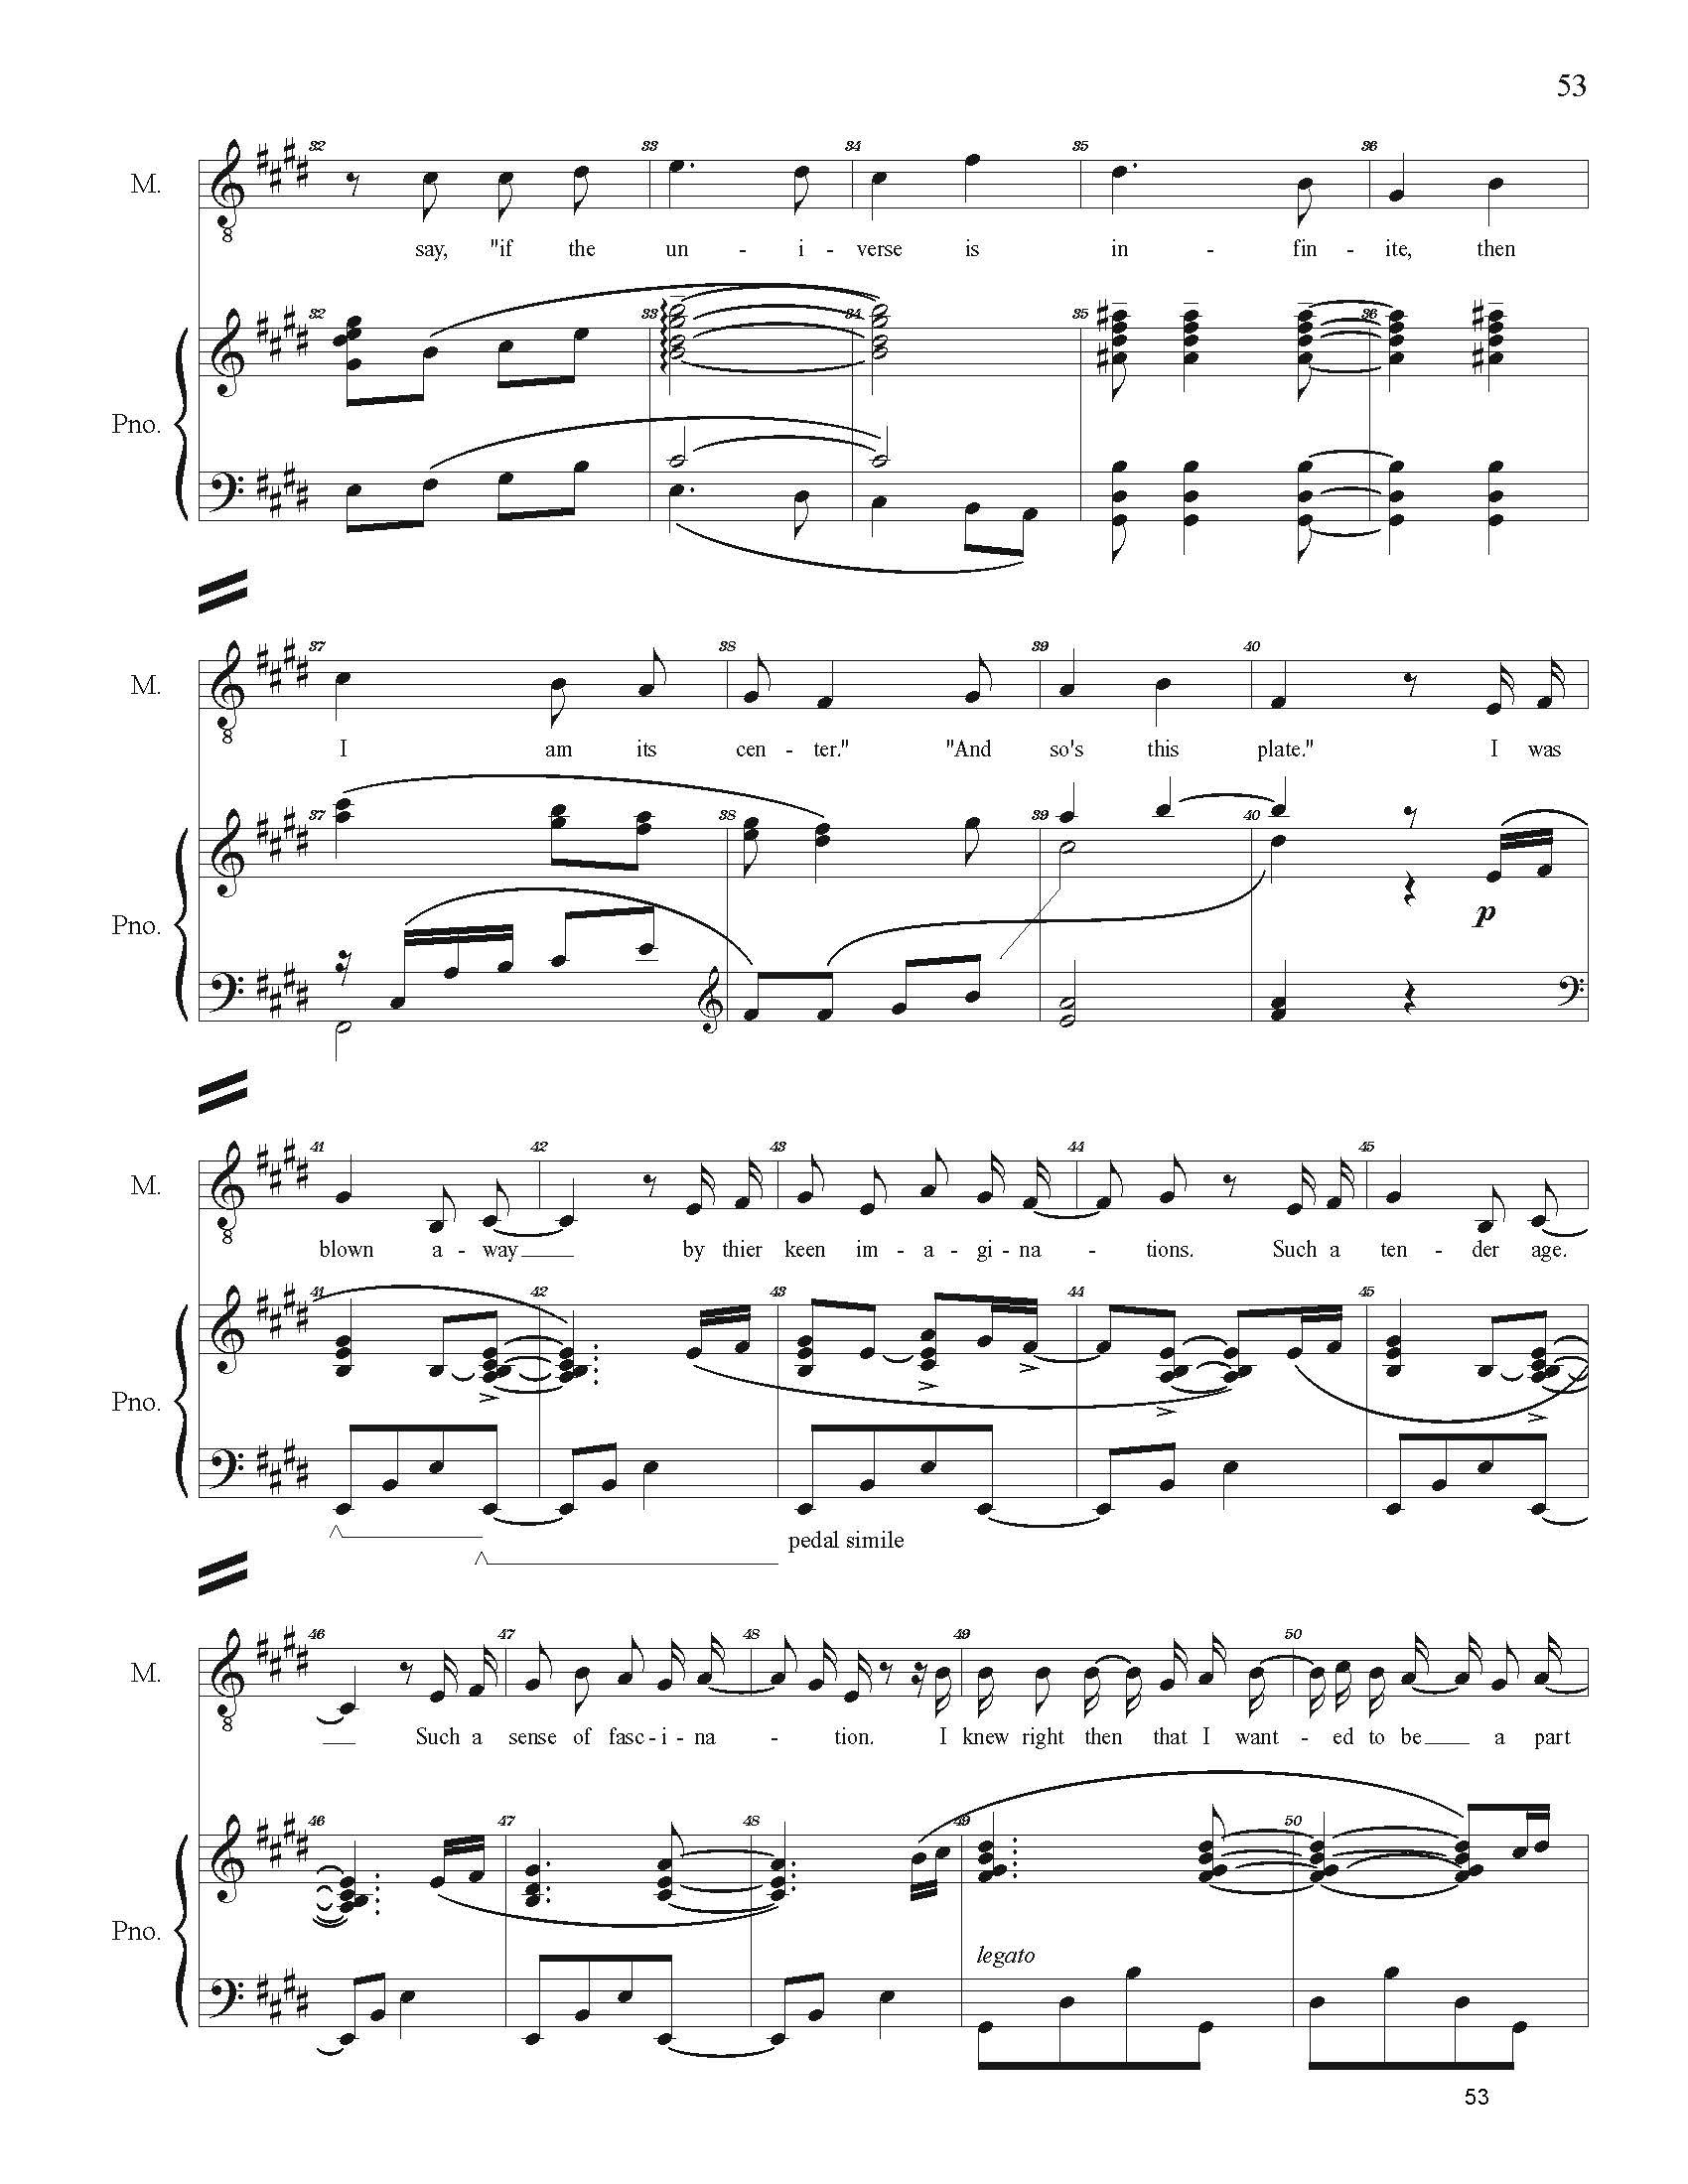 FULL PIANO VOCAL SCORE DRAFT 1 - Score_Page_053.jpg